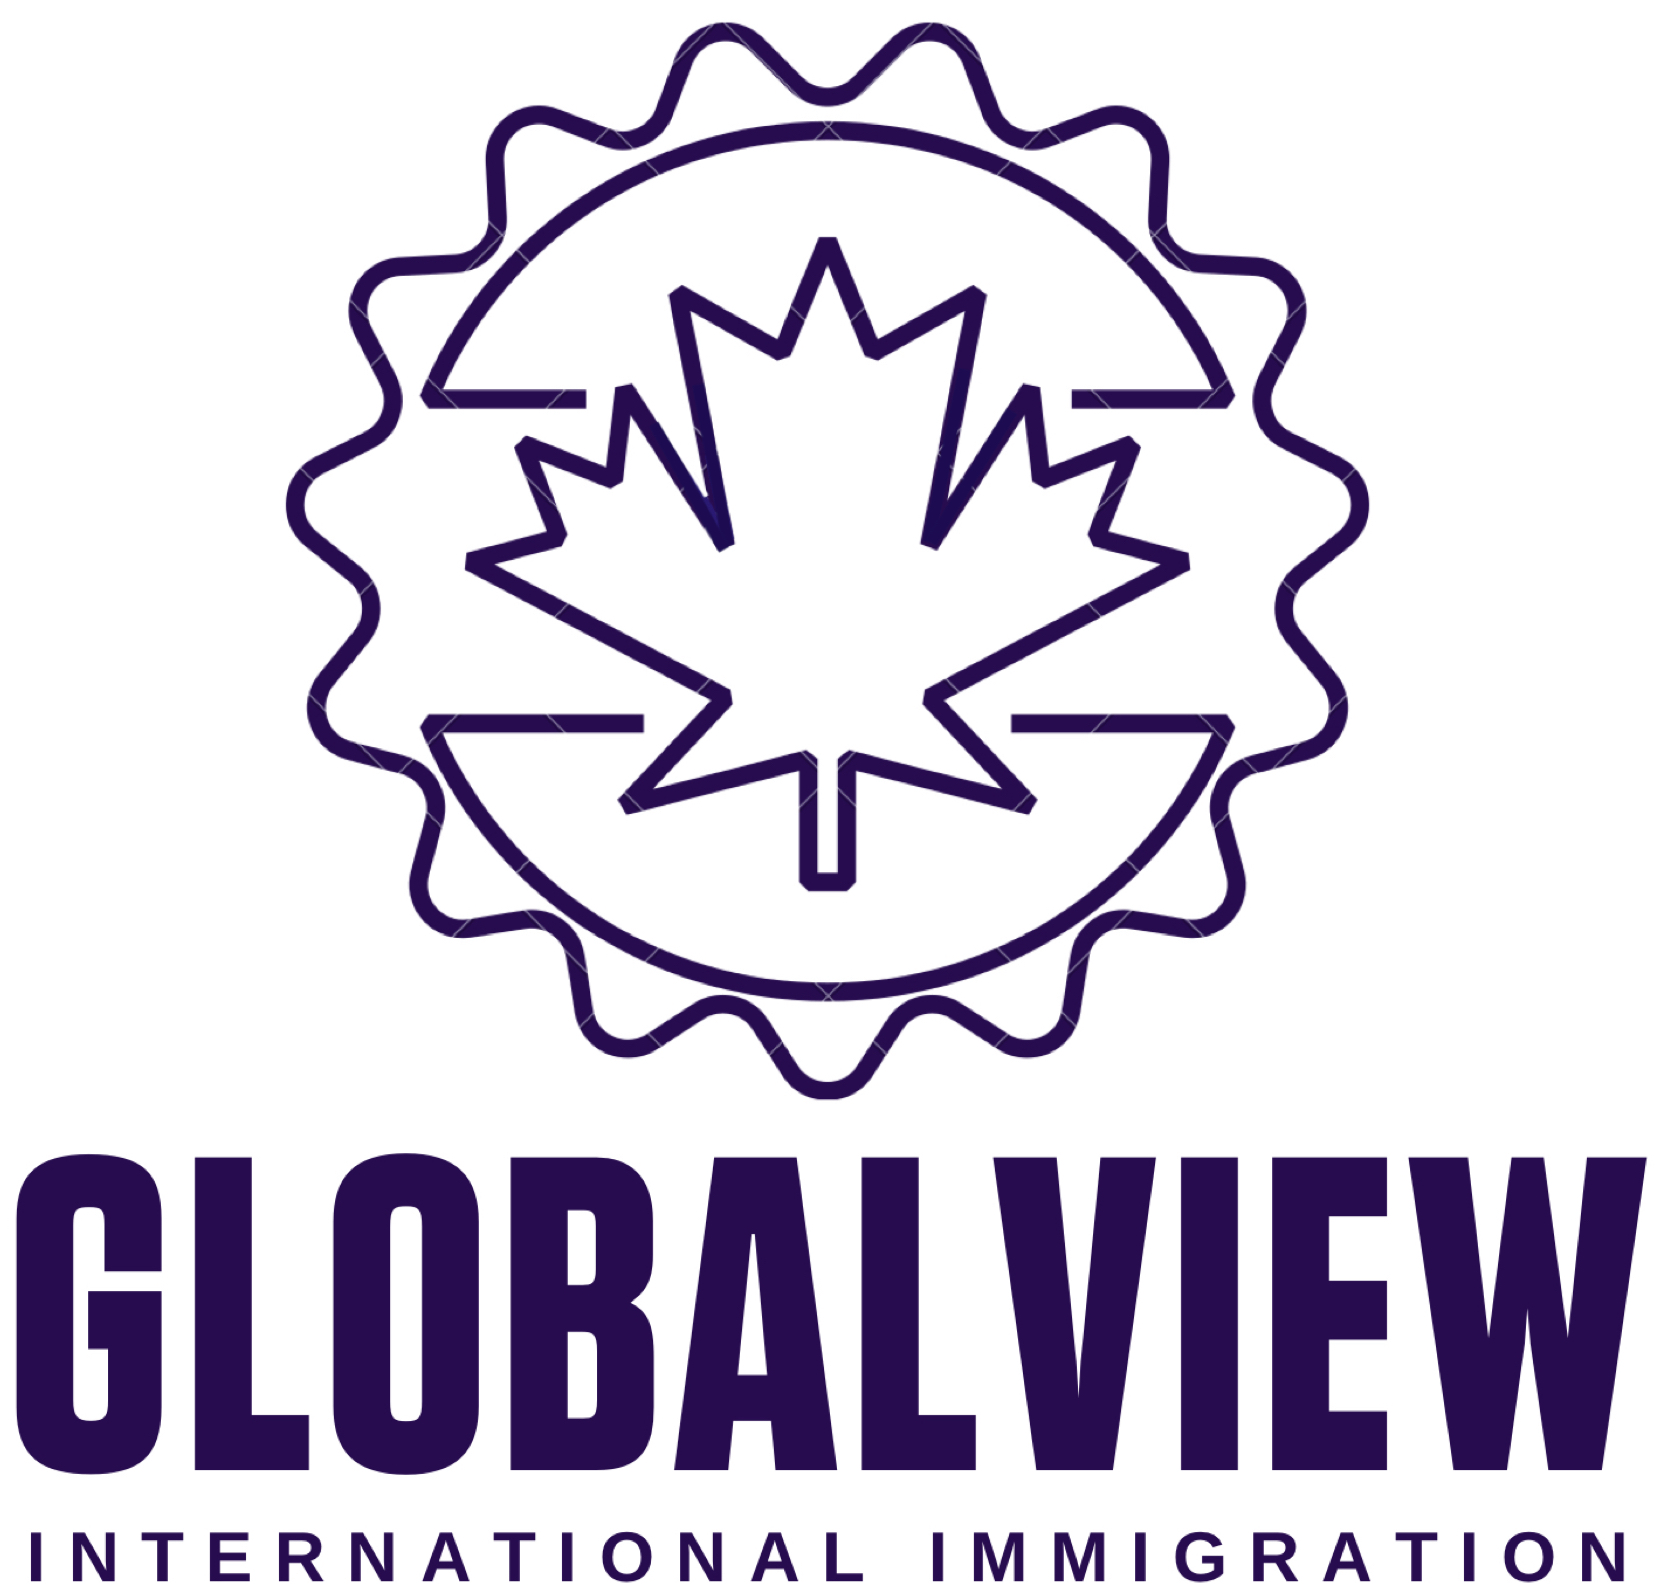 GLOBALVIEW INTERNATIONAL IMMIGRATION